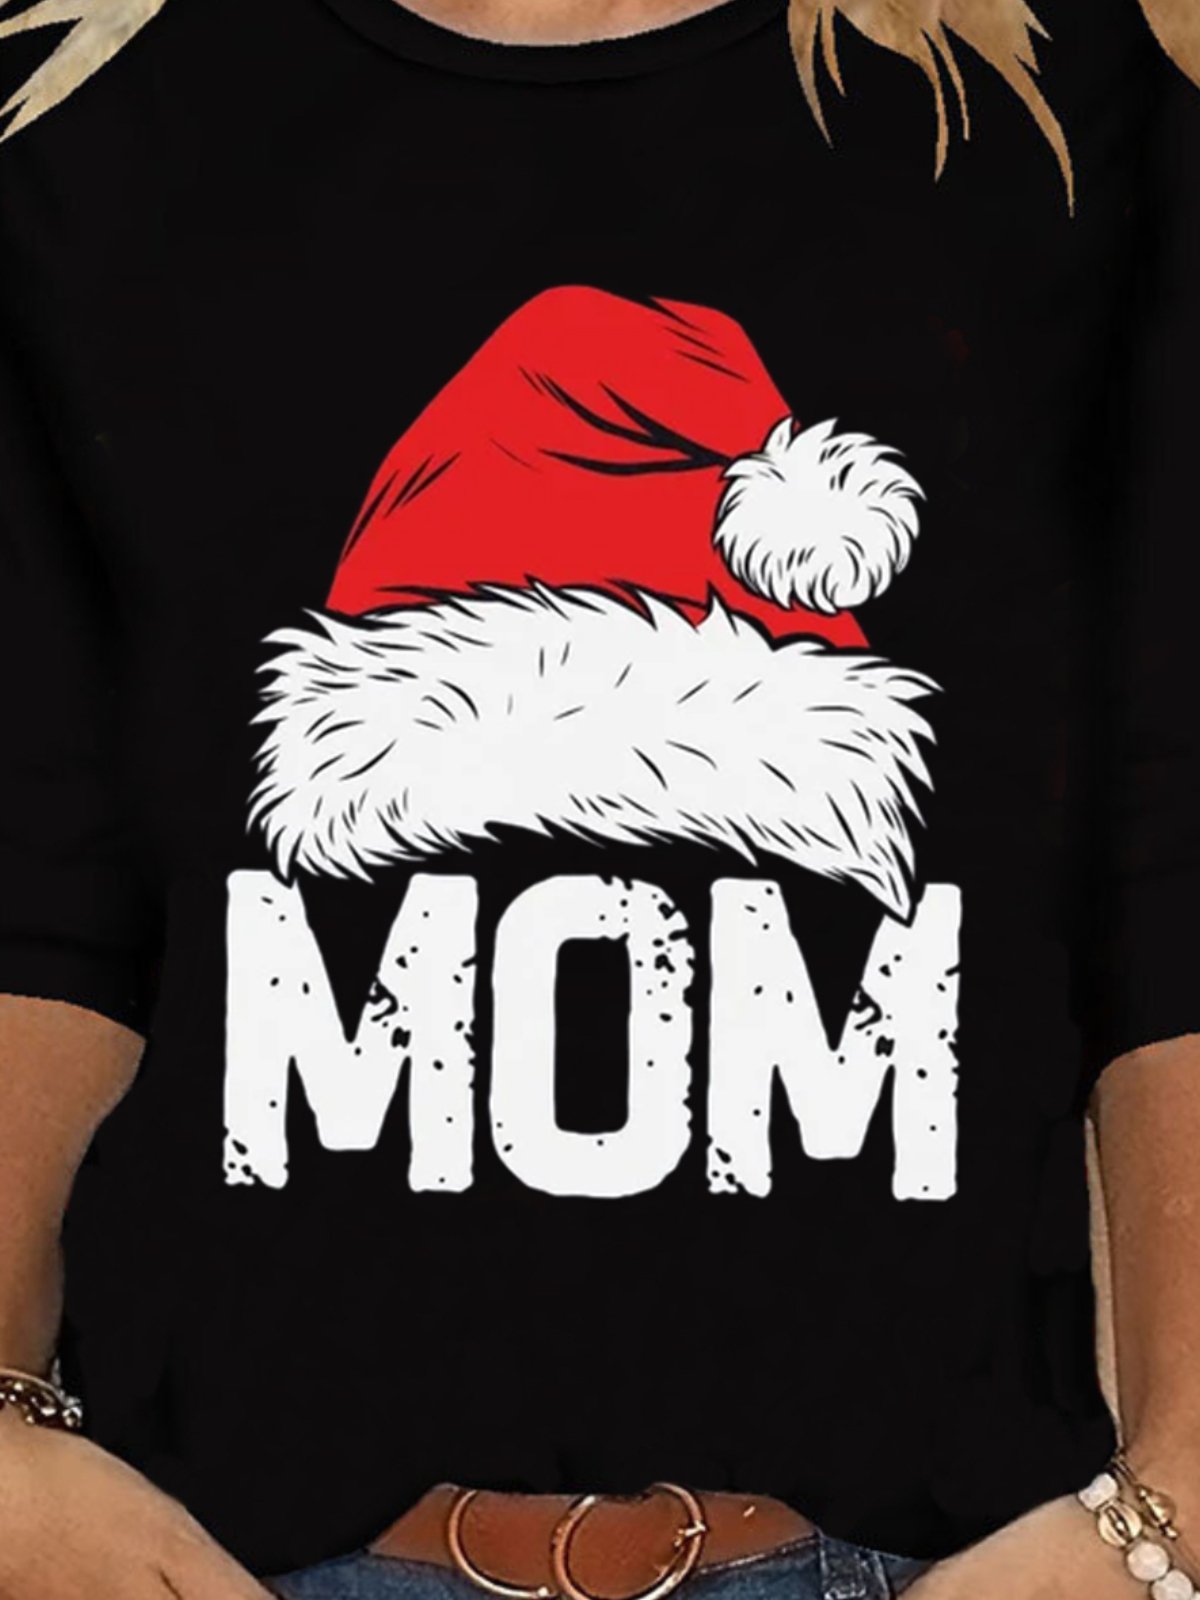 Christmas Xmas Hat Long Sleeve Round Neck Printed Top T-shirt